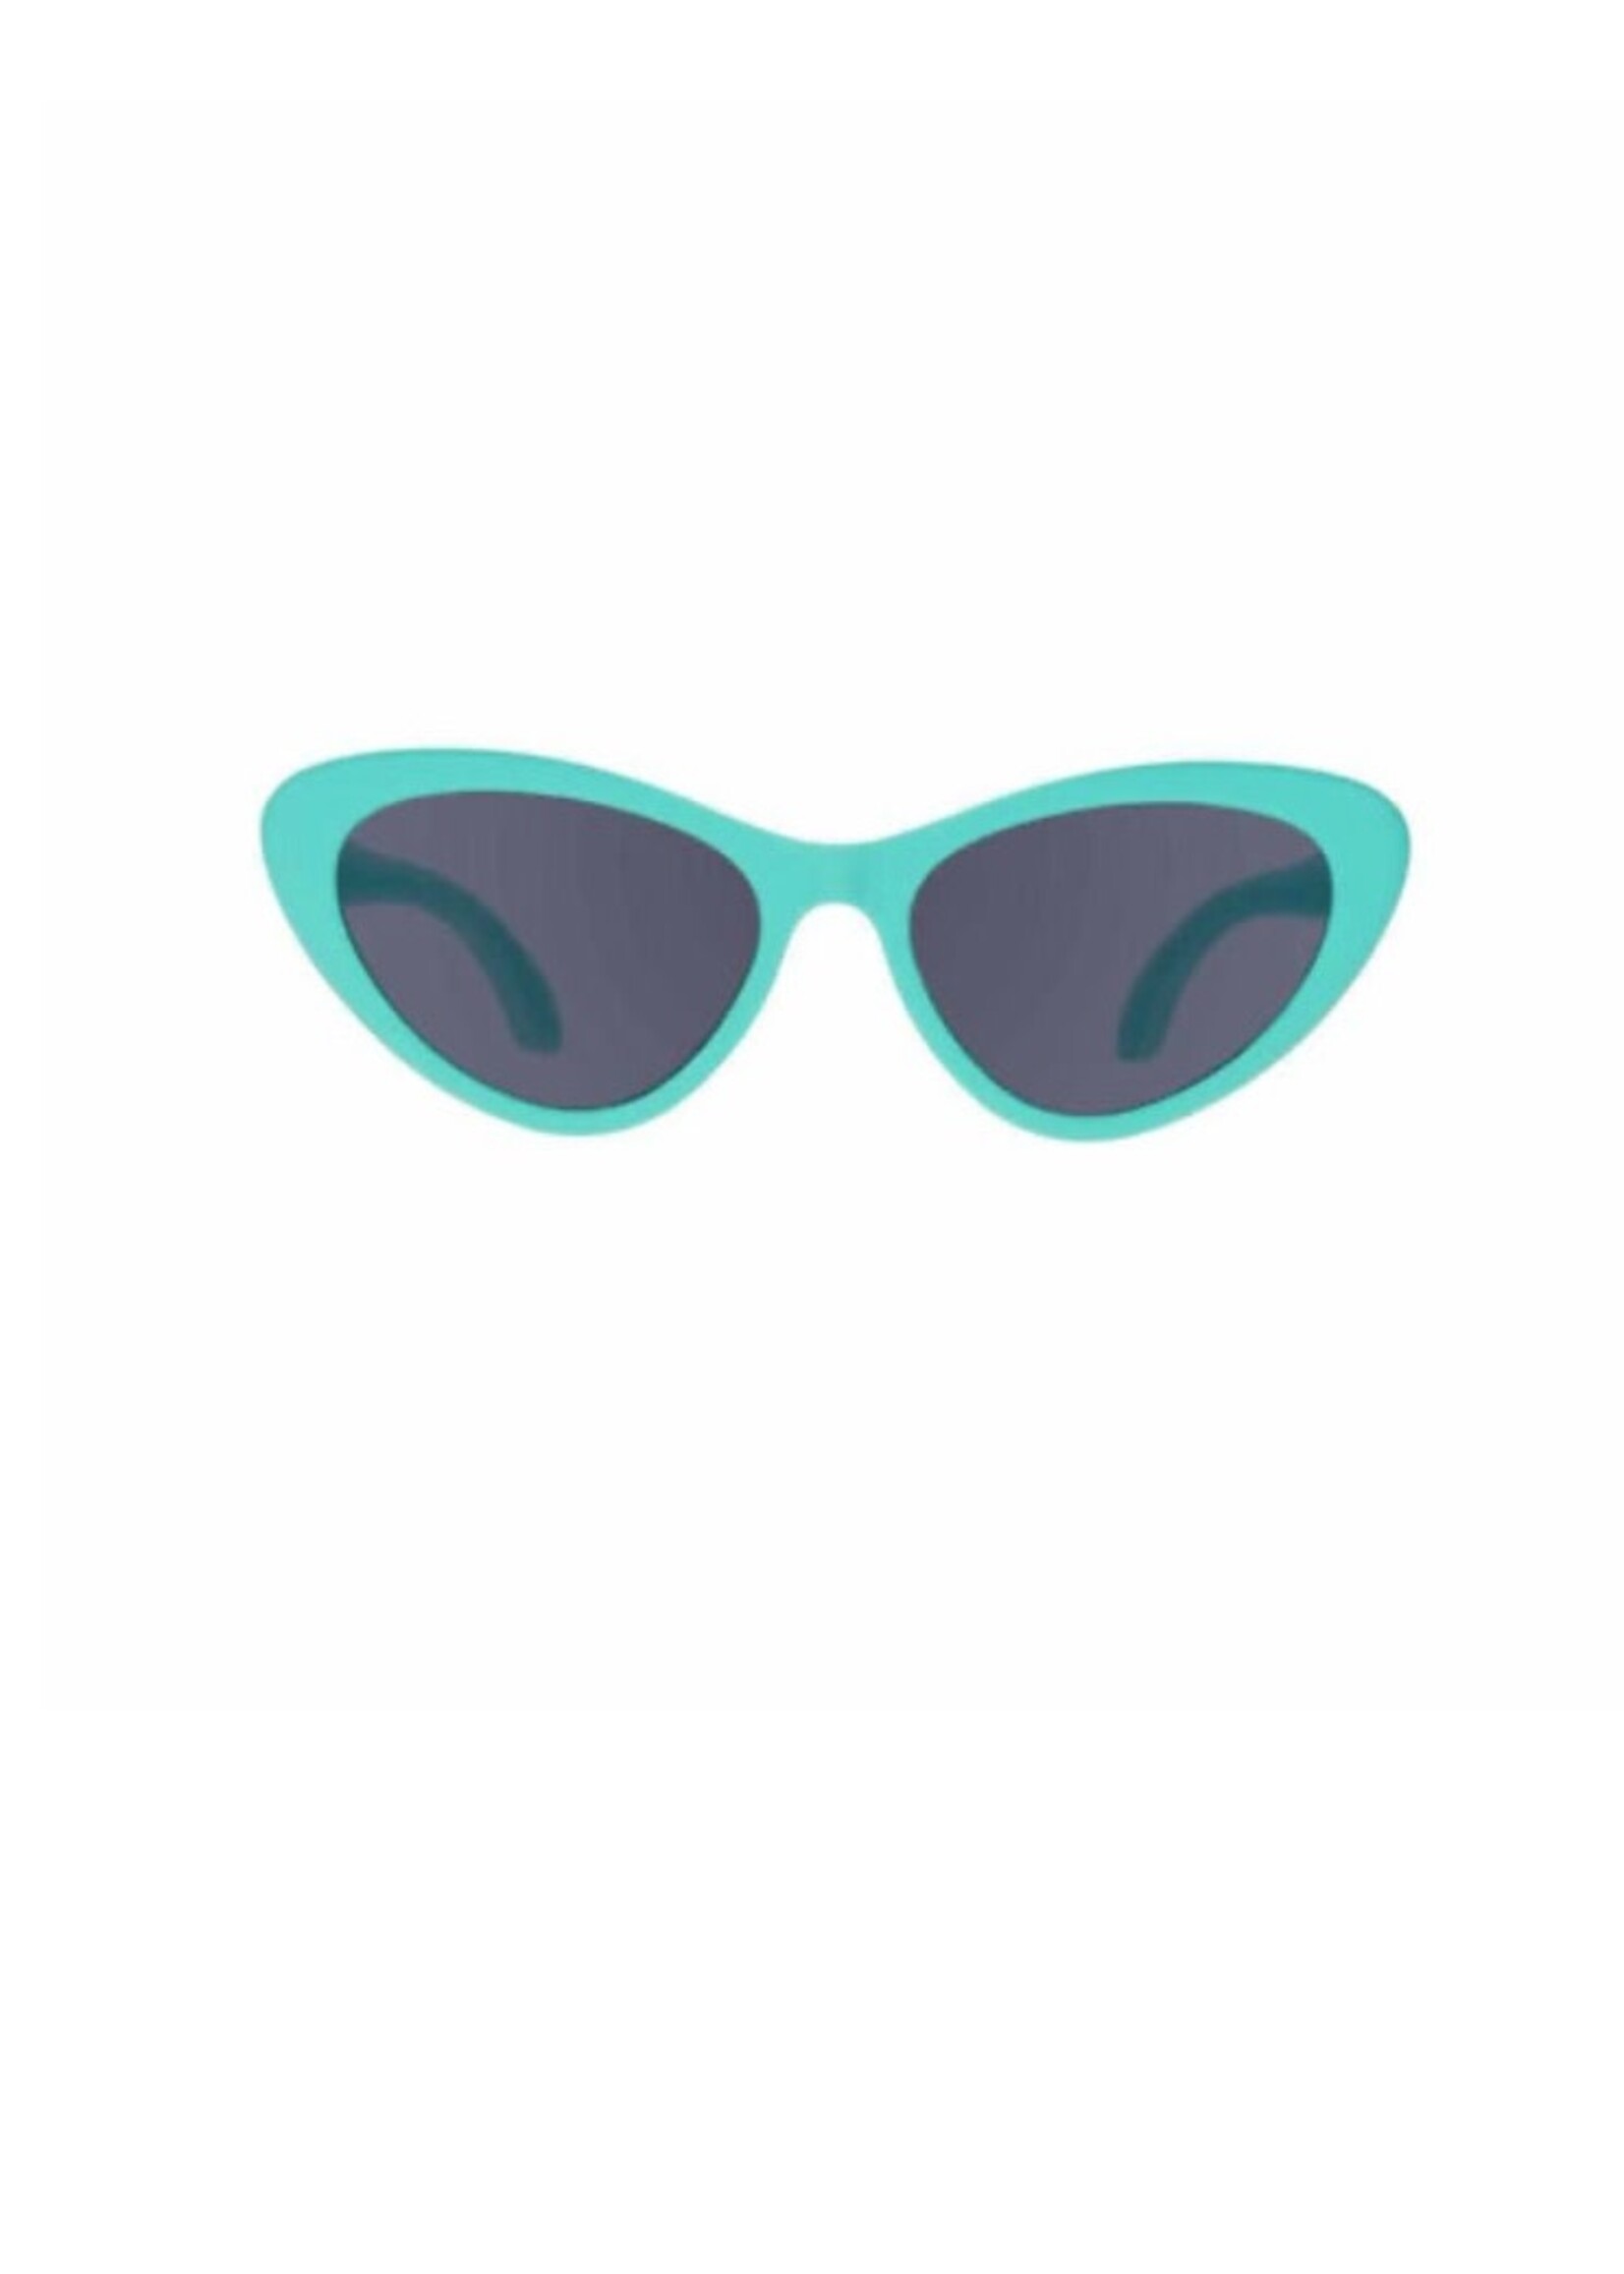 Babiators Babiators, Original Cat-Eye: Totally Sunglasses || Turquoise